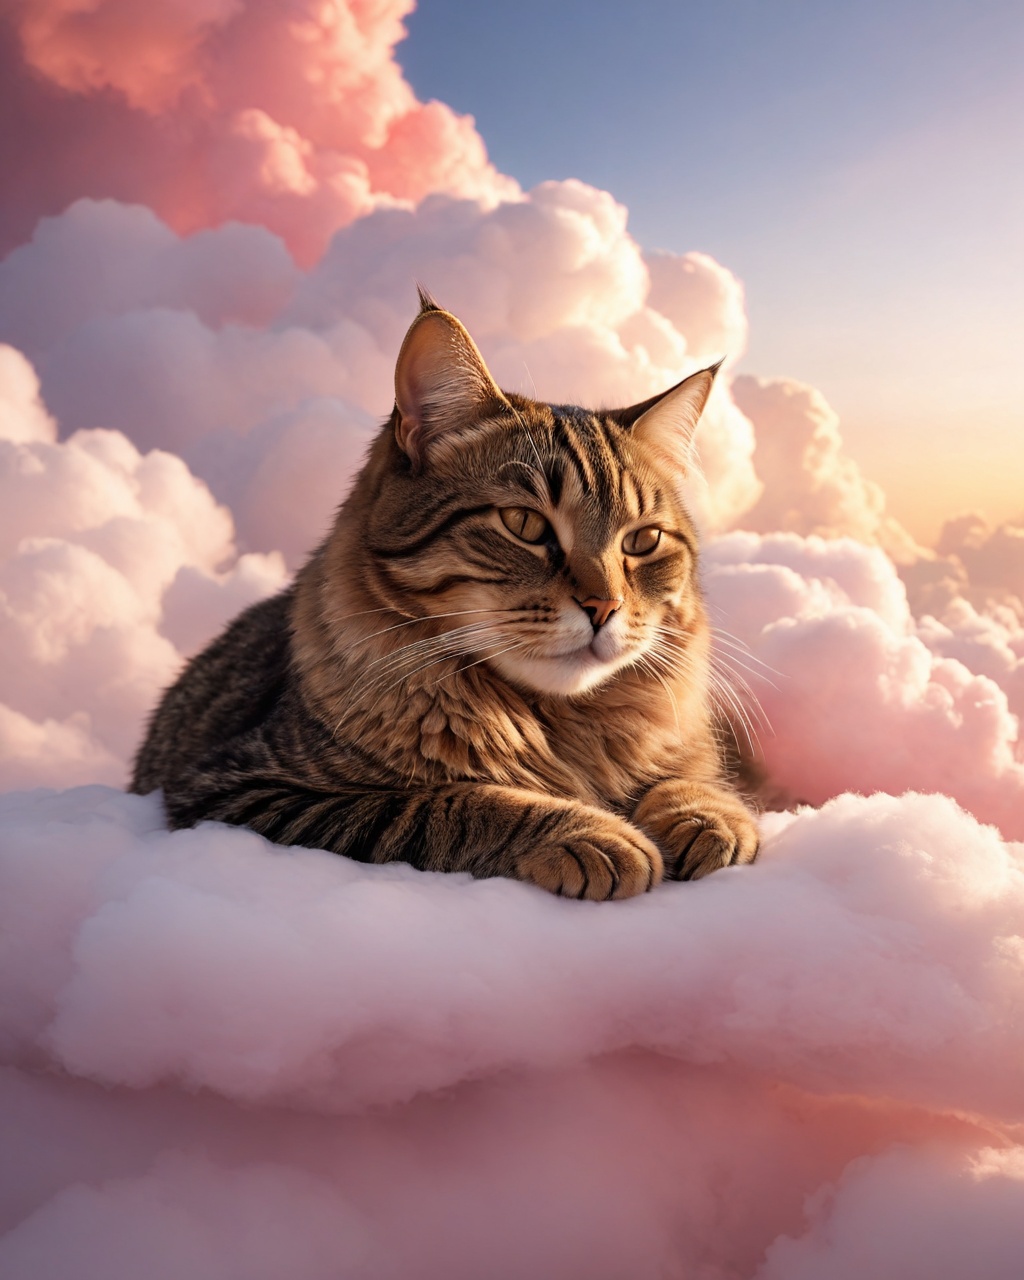 photo,cinematic,high resolution,giant tabby cat,sleeping on cloud,rosy cloud,sky,dawn,